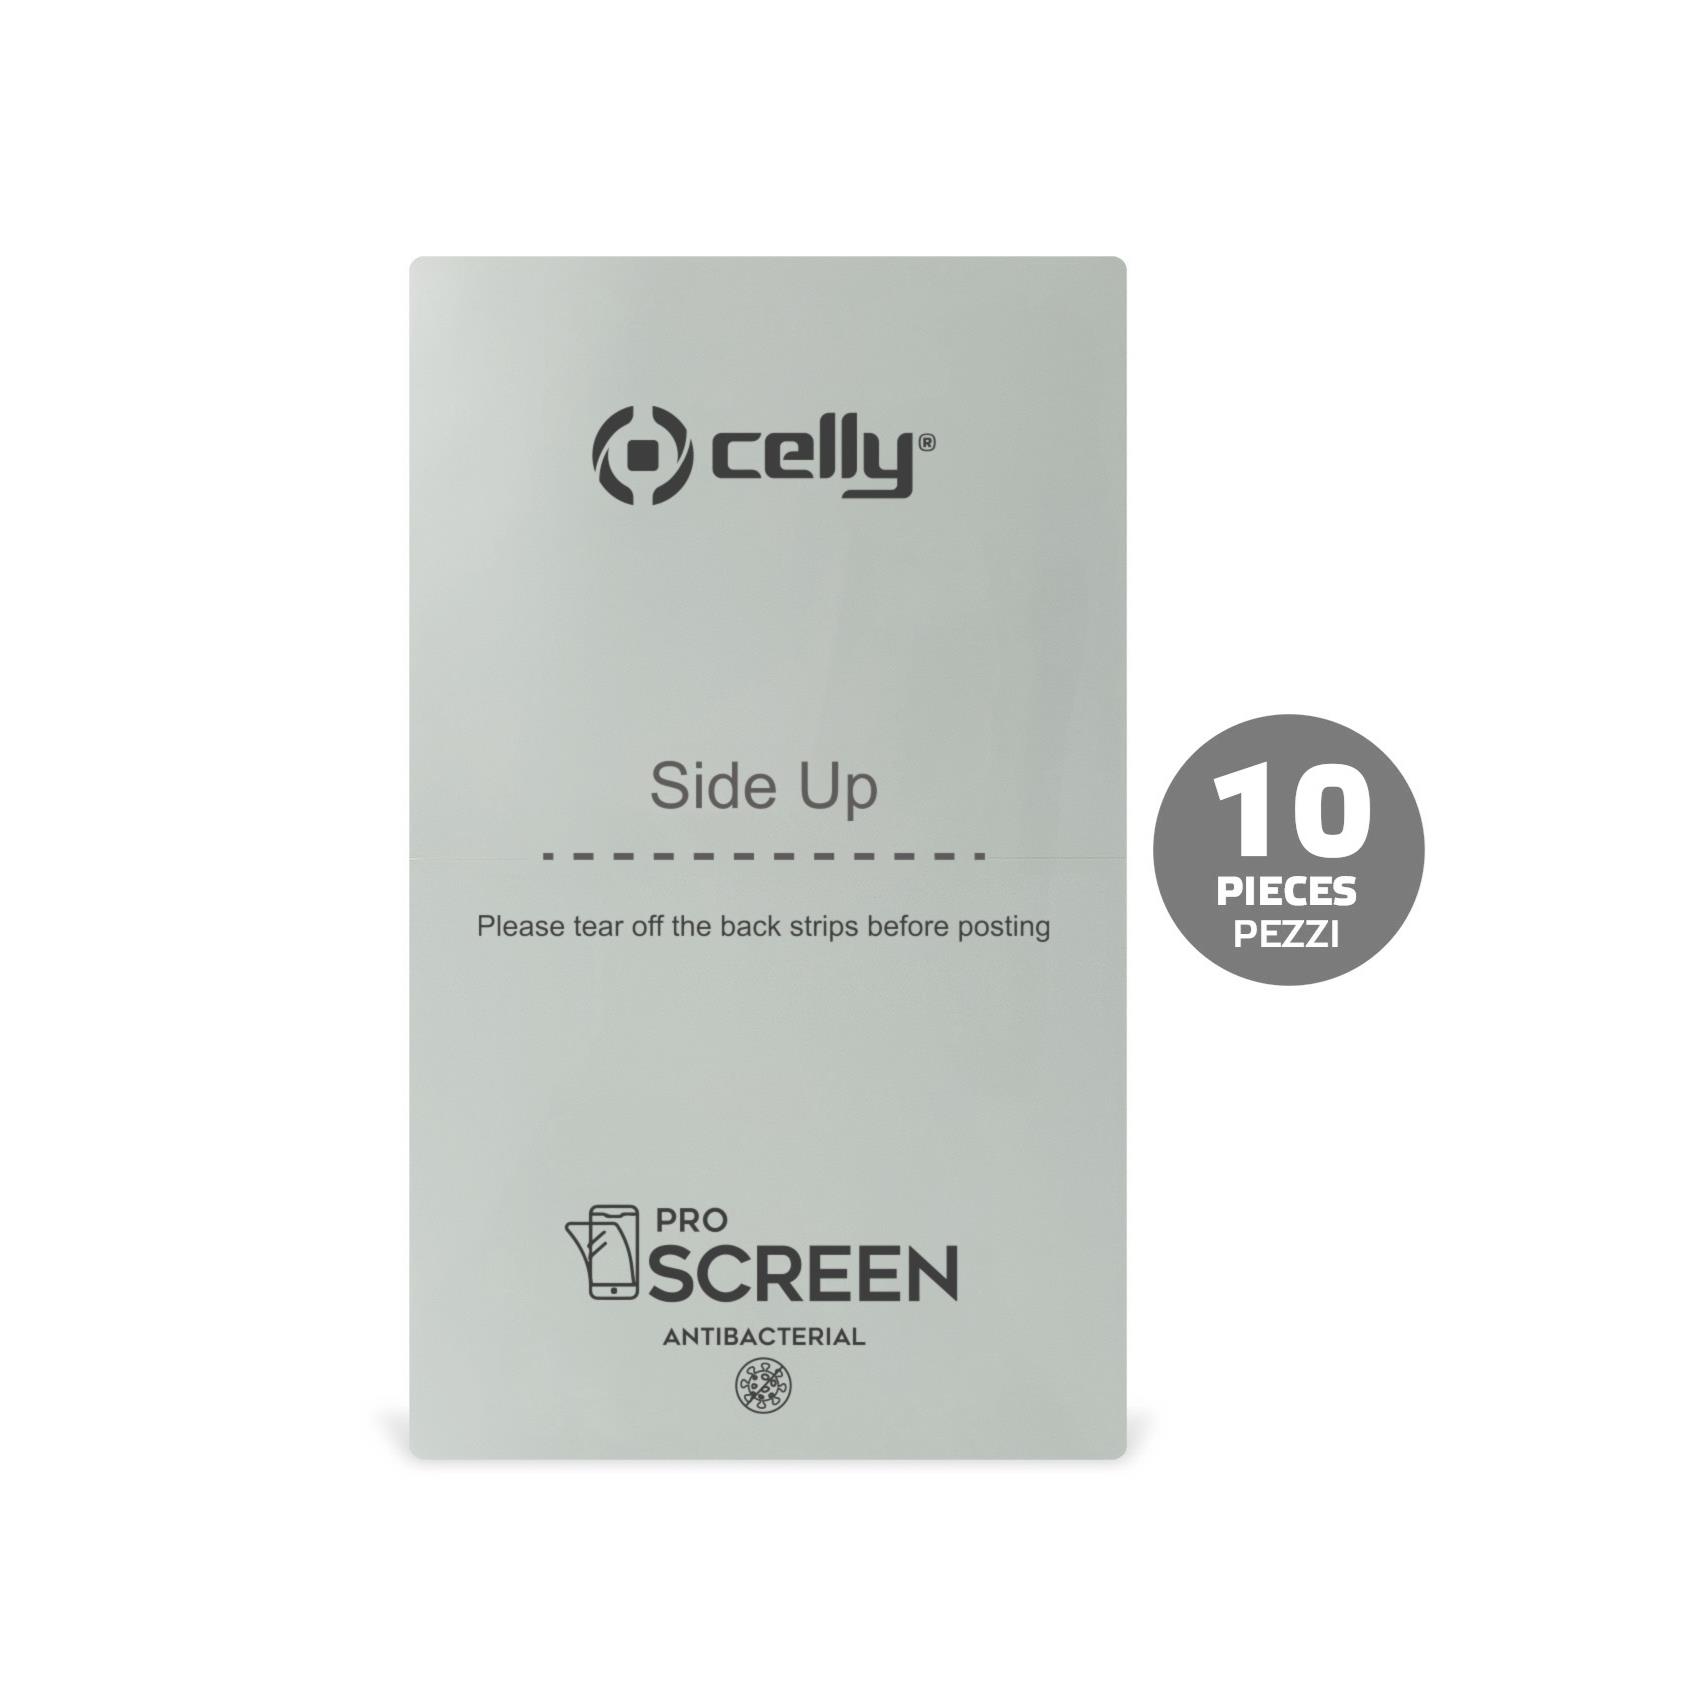 Pro Screen Film Antibact 10pz Celly Profilm10ab 8021735761914